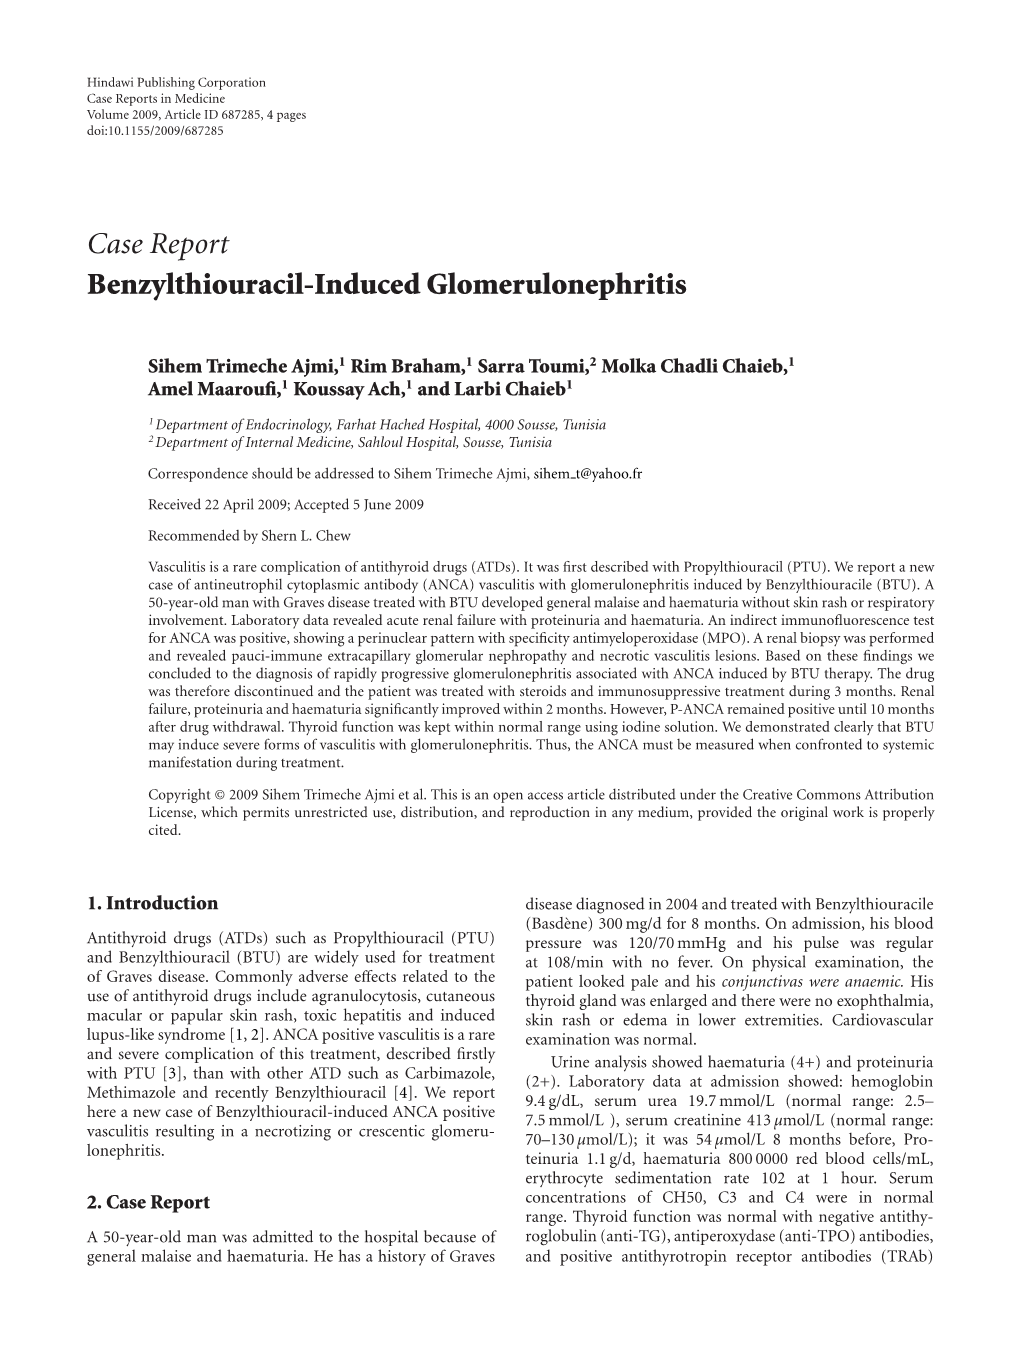 Case Report Benzylthiouracil-Induced Glomerulonephritis